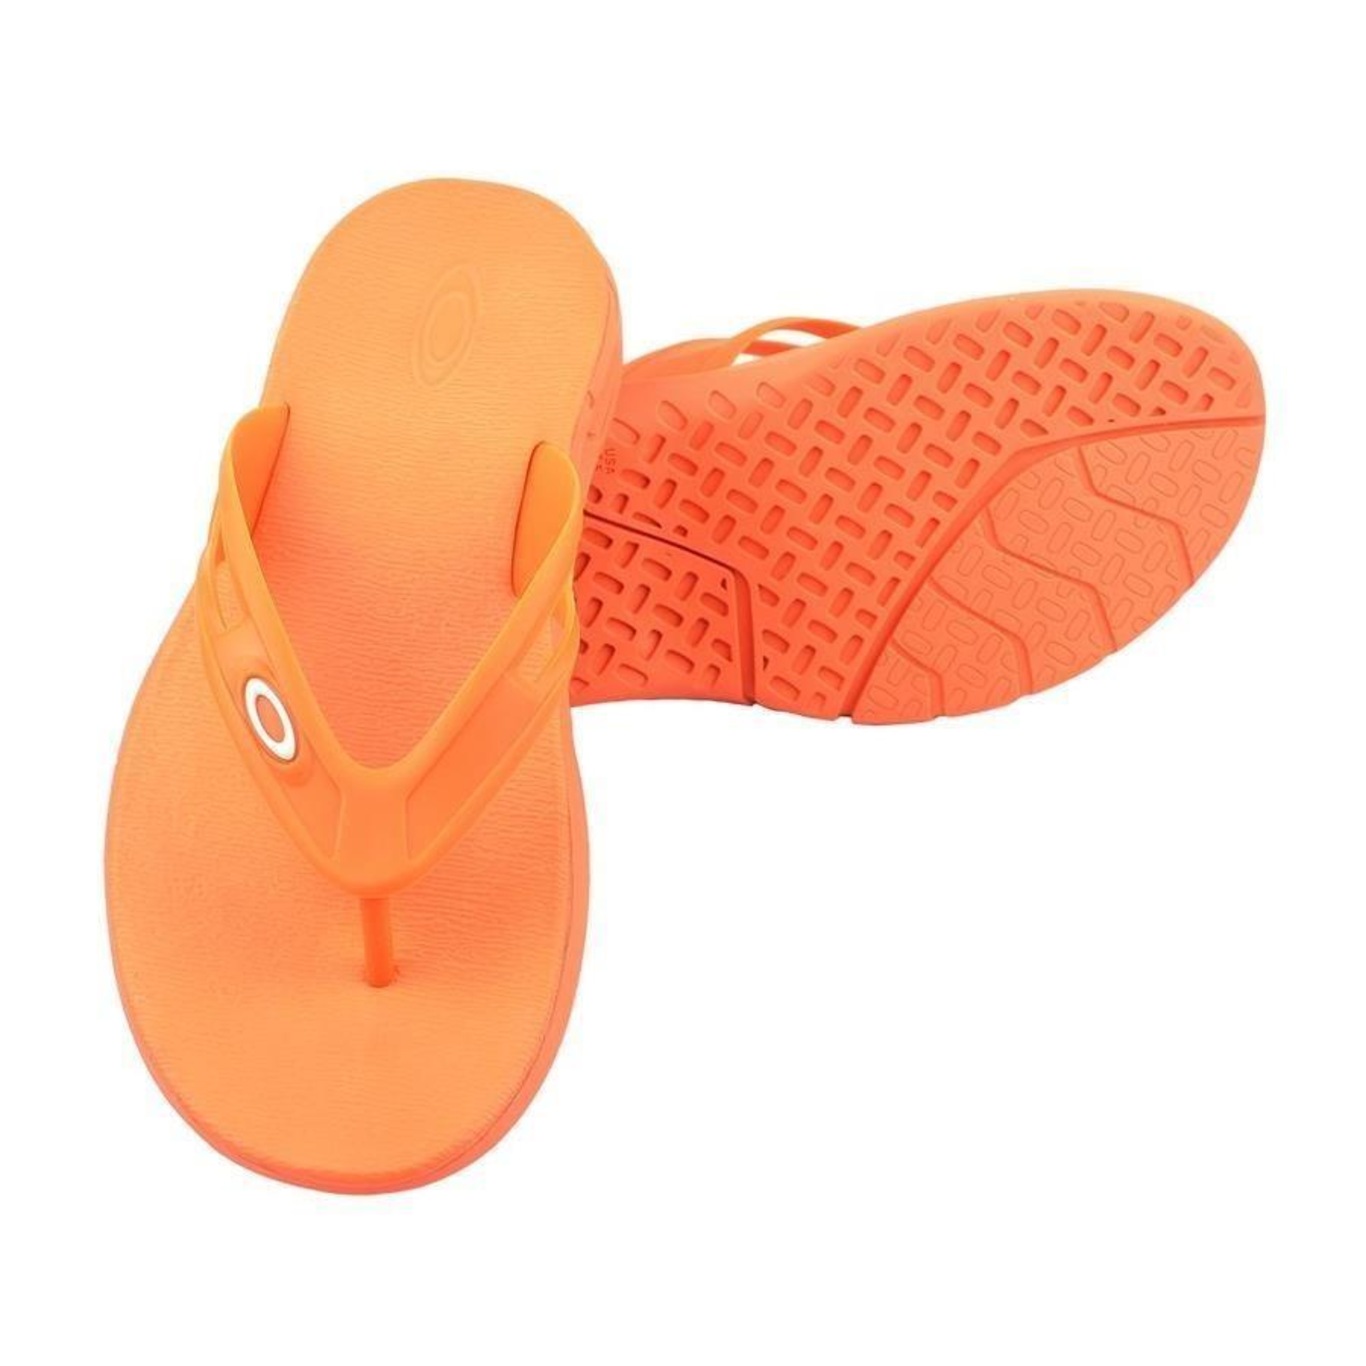 Men's Cycling Shorts Fluo Orange (Outlet) – OTSO